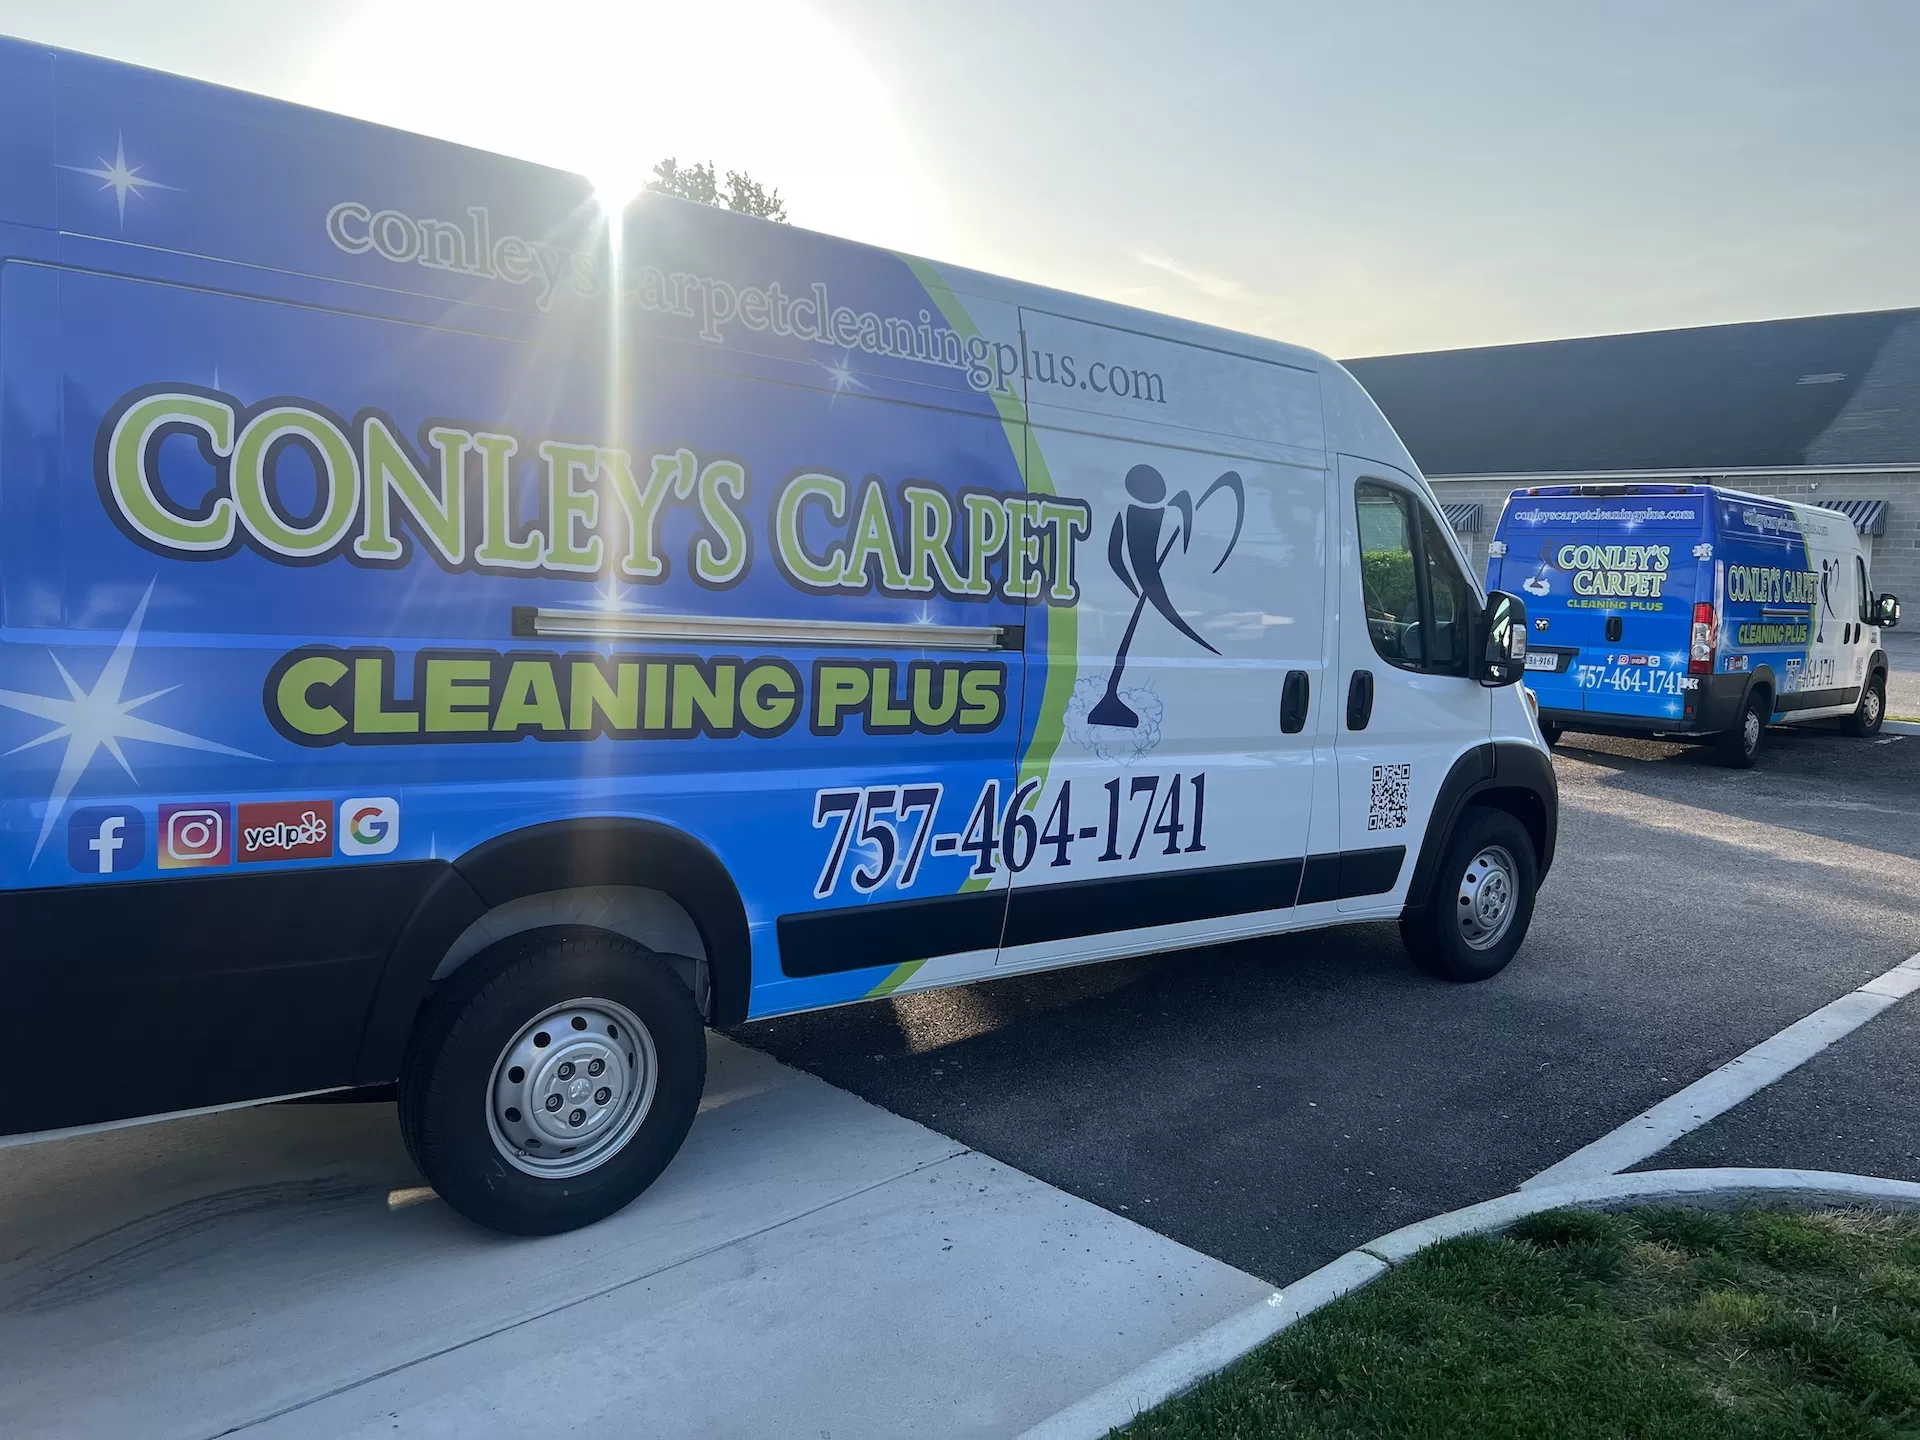 Virginia Beach Carpet Cleaning Company